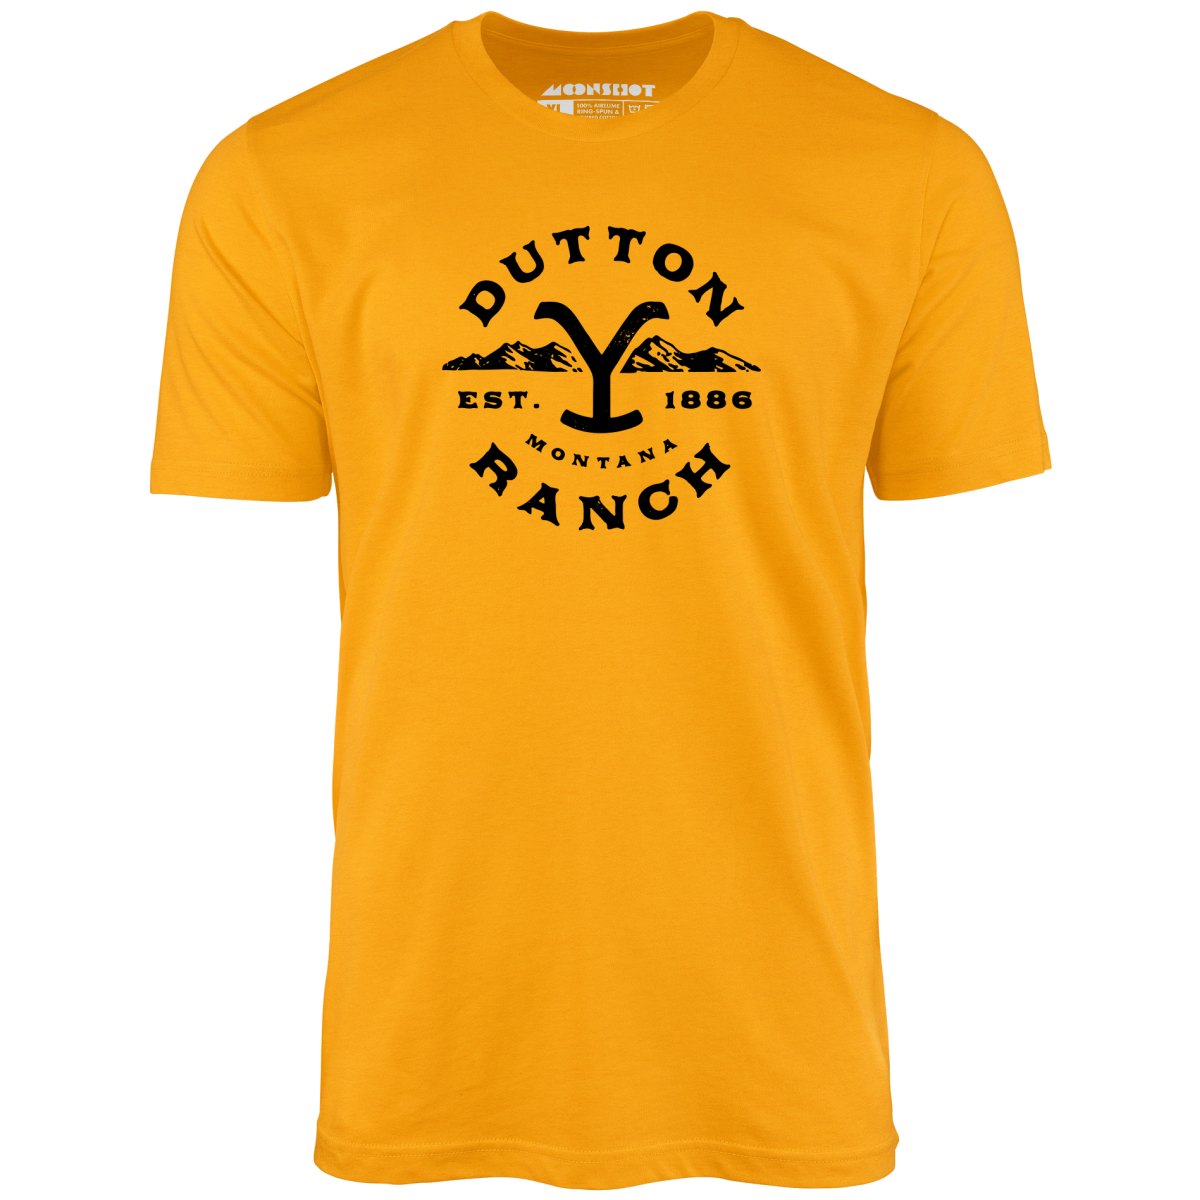 Dutton Ranch - Unisex T-Shirt